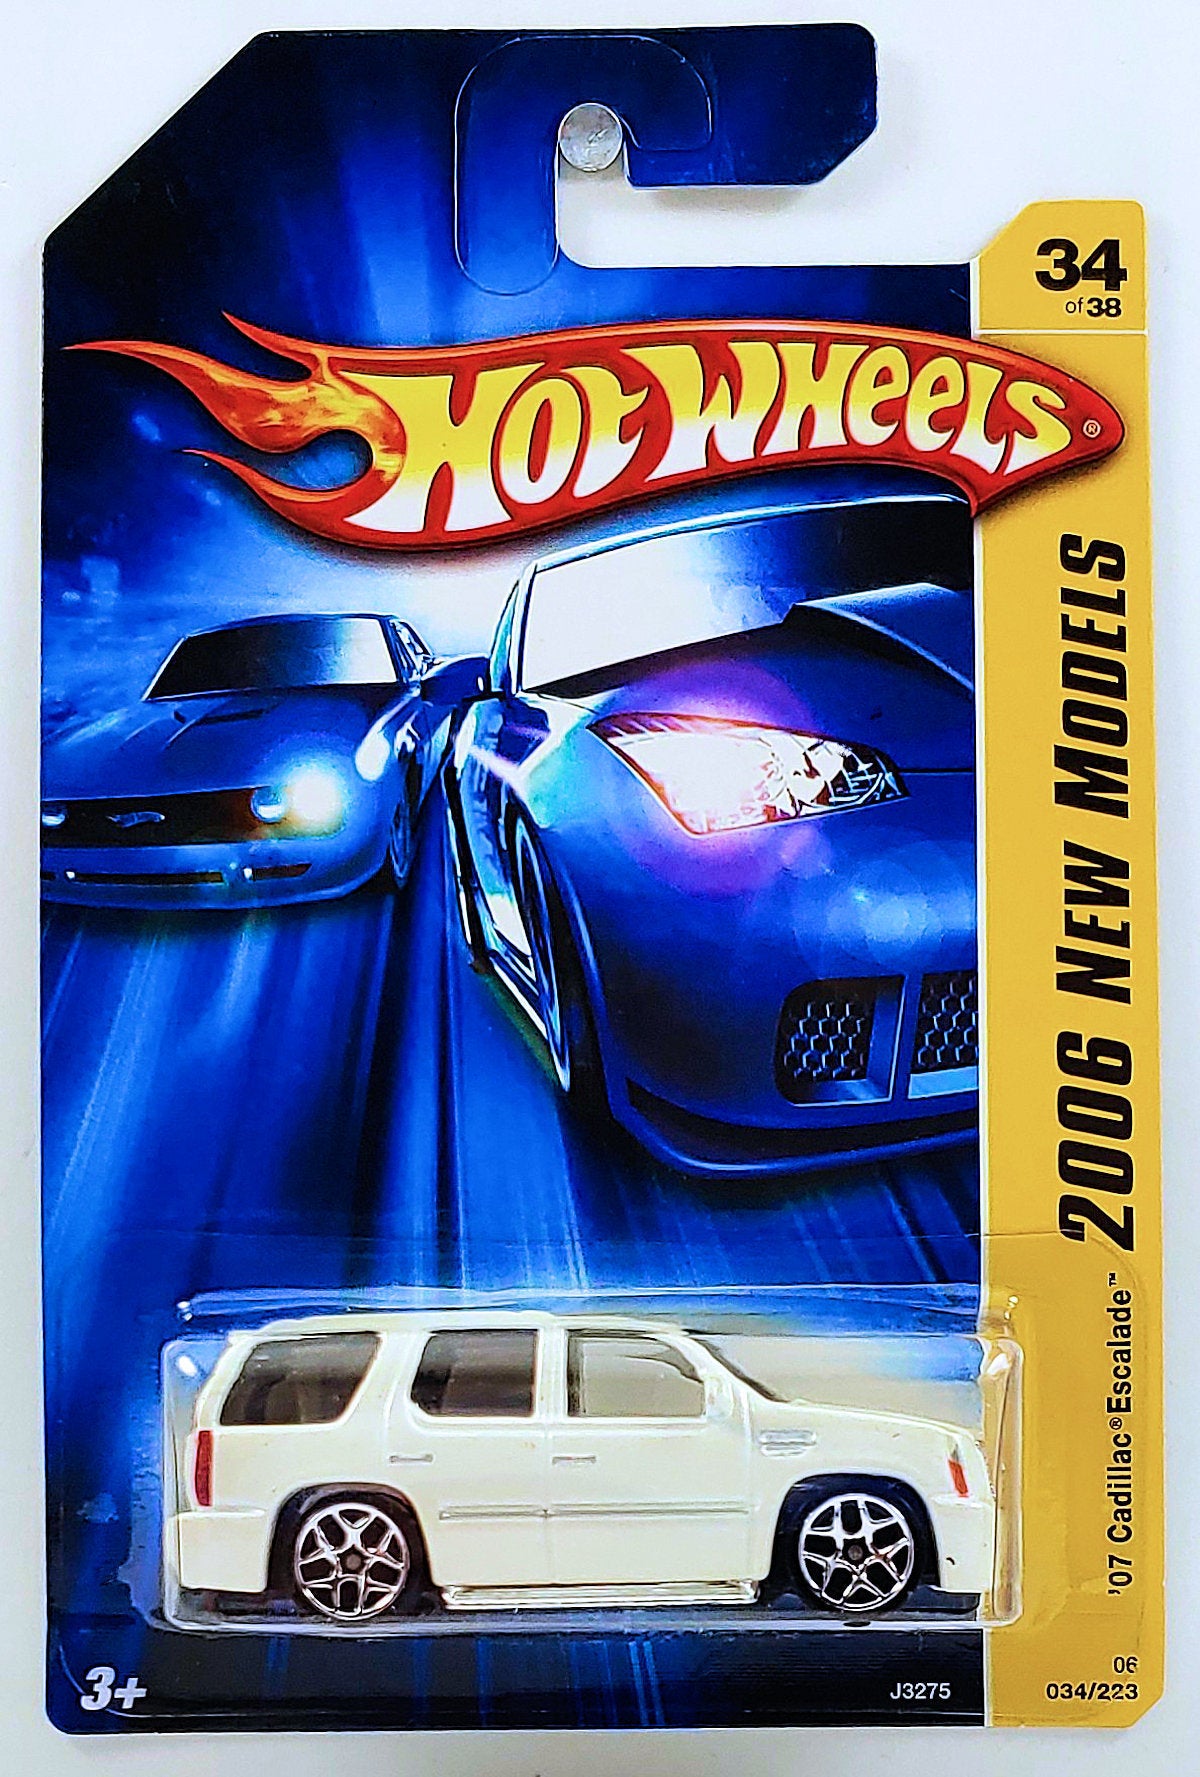 Hot Wheels 2006 - Collector # 034/223 - New Models 34/38 - '07 Cadillac Escalade - White - Y5 Wheels - USA '07